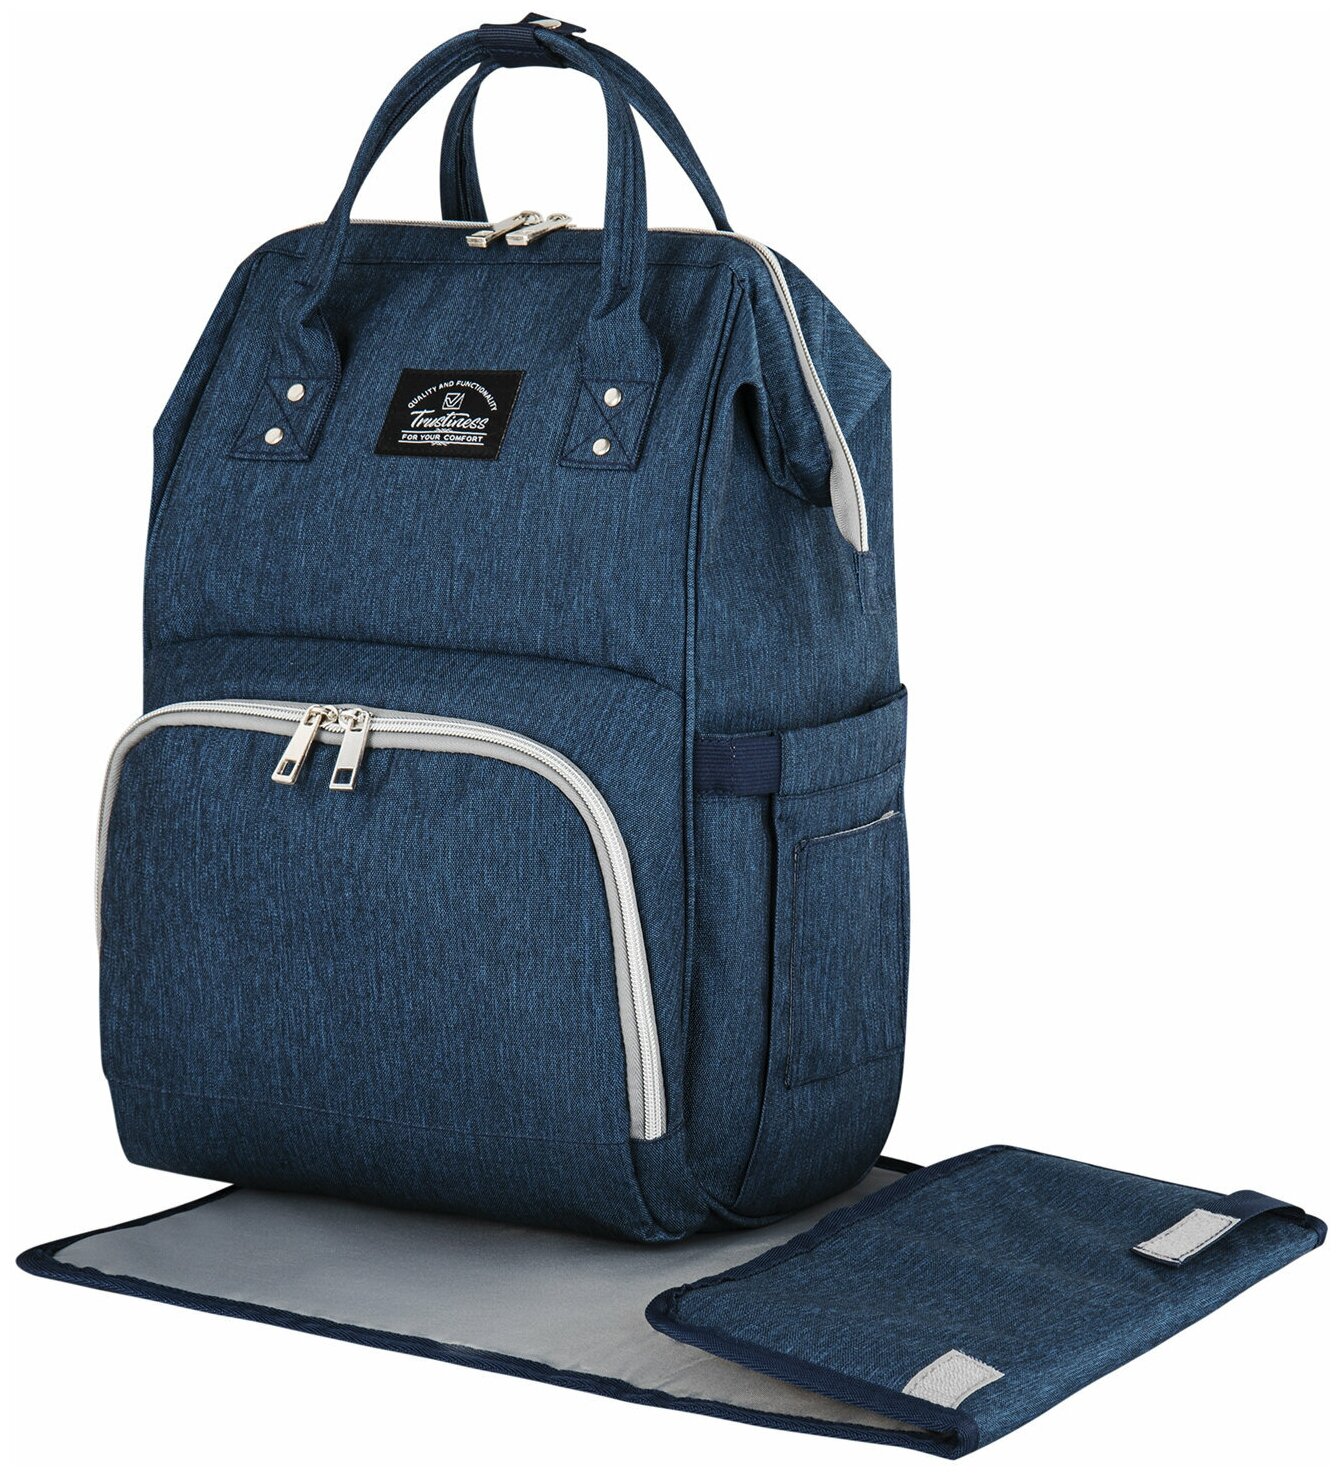 Рюкзак для мамы Brauberg Mommy с ковриком, крепления на коляску, термокарманы, синий, 40x26x17 см